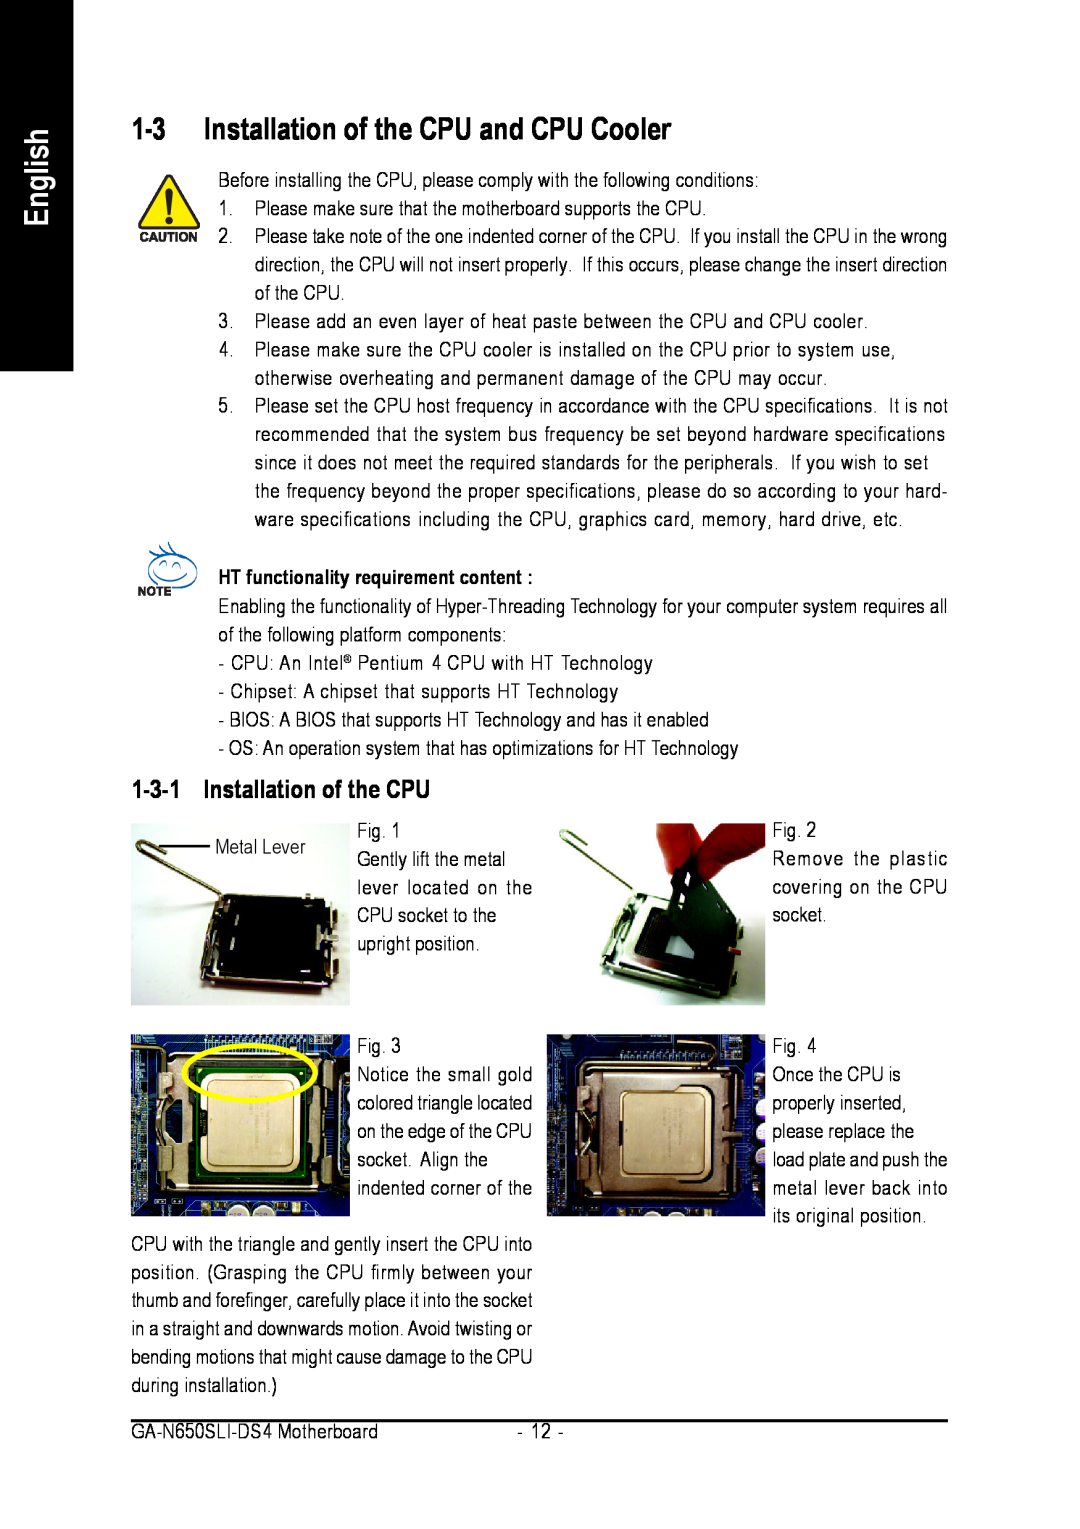 Intel GA-N650SLI-DS4 user manual Installation of the CPU and CPU Cooler, English 